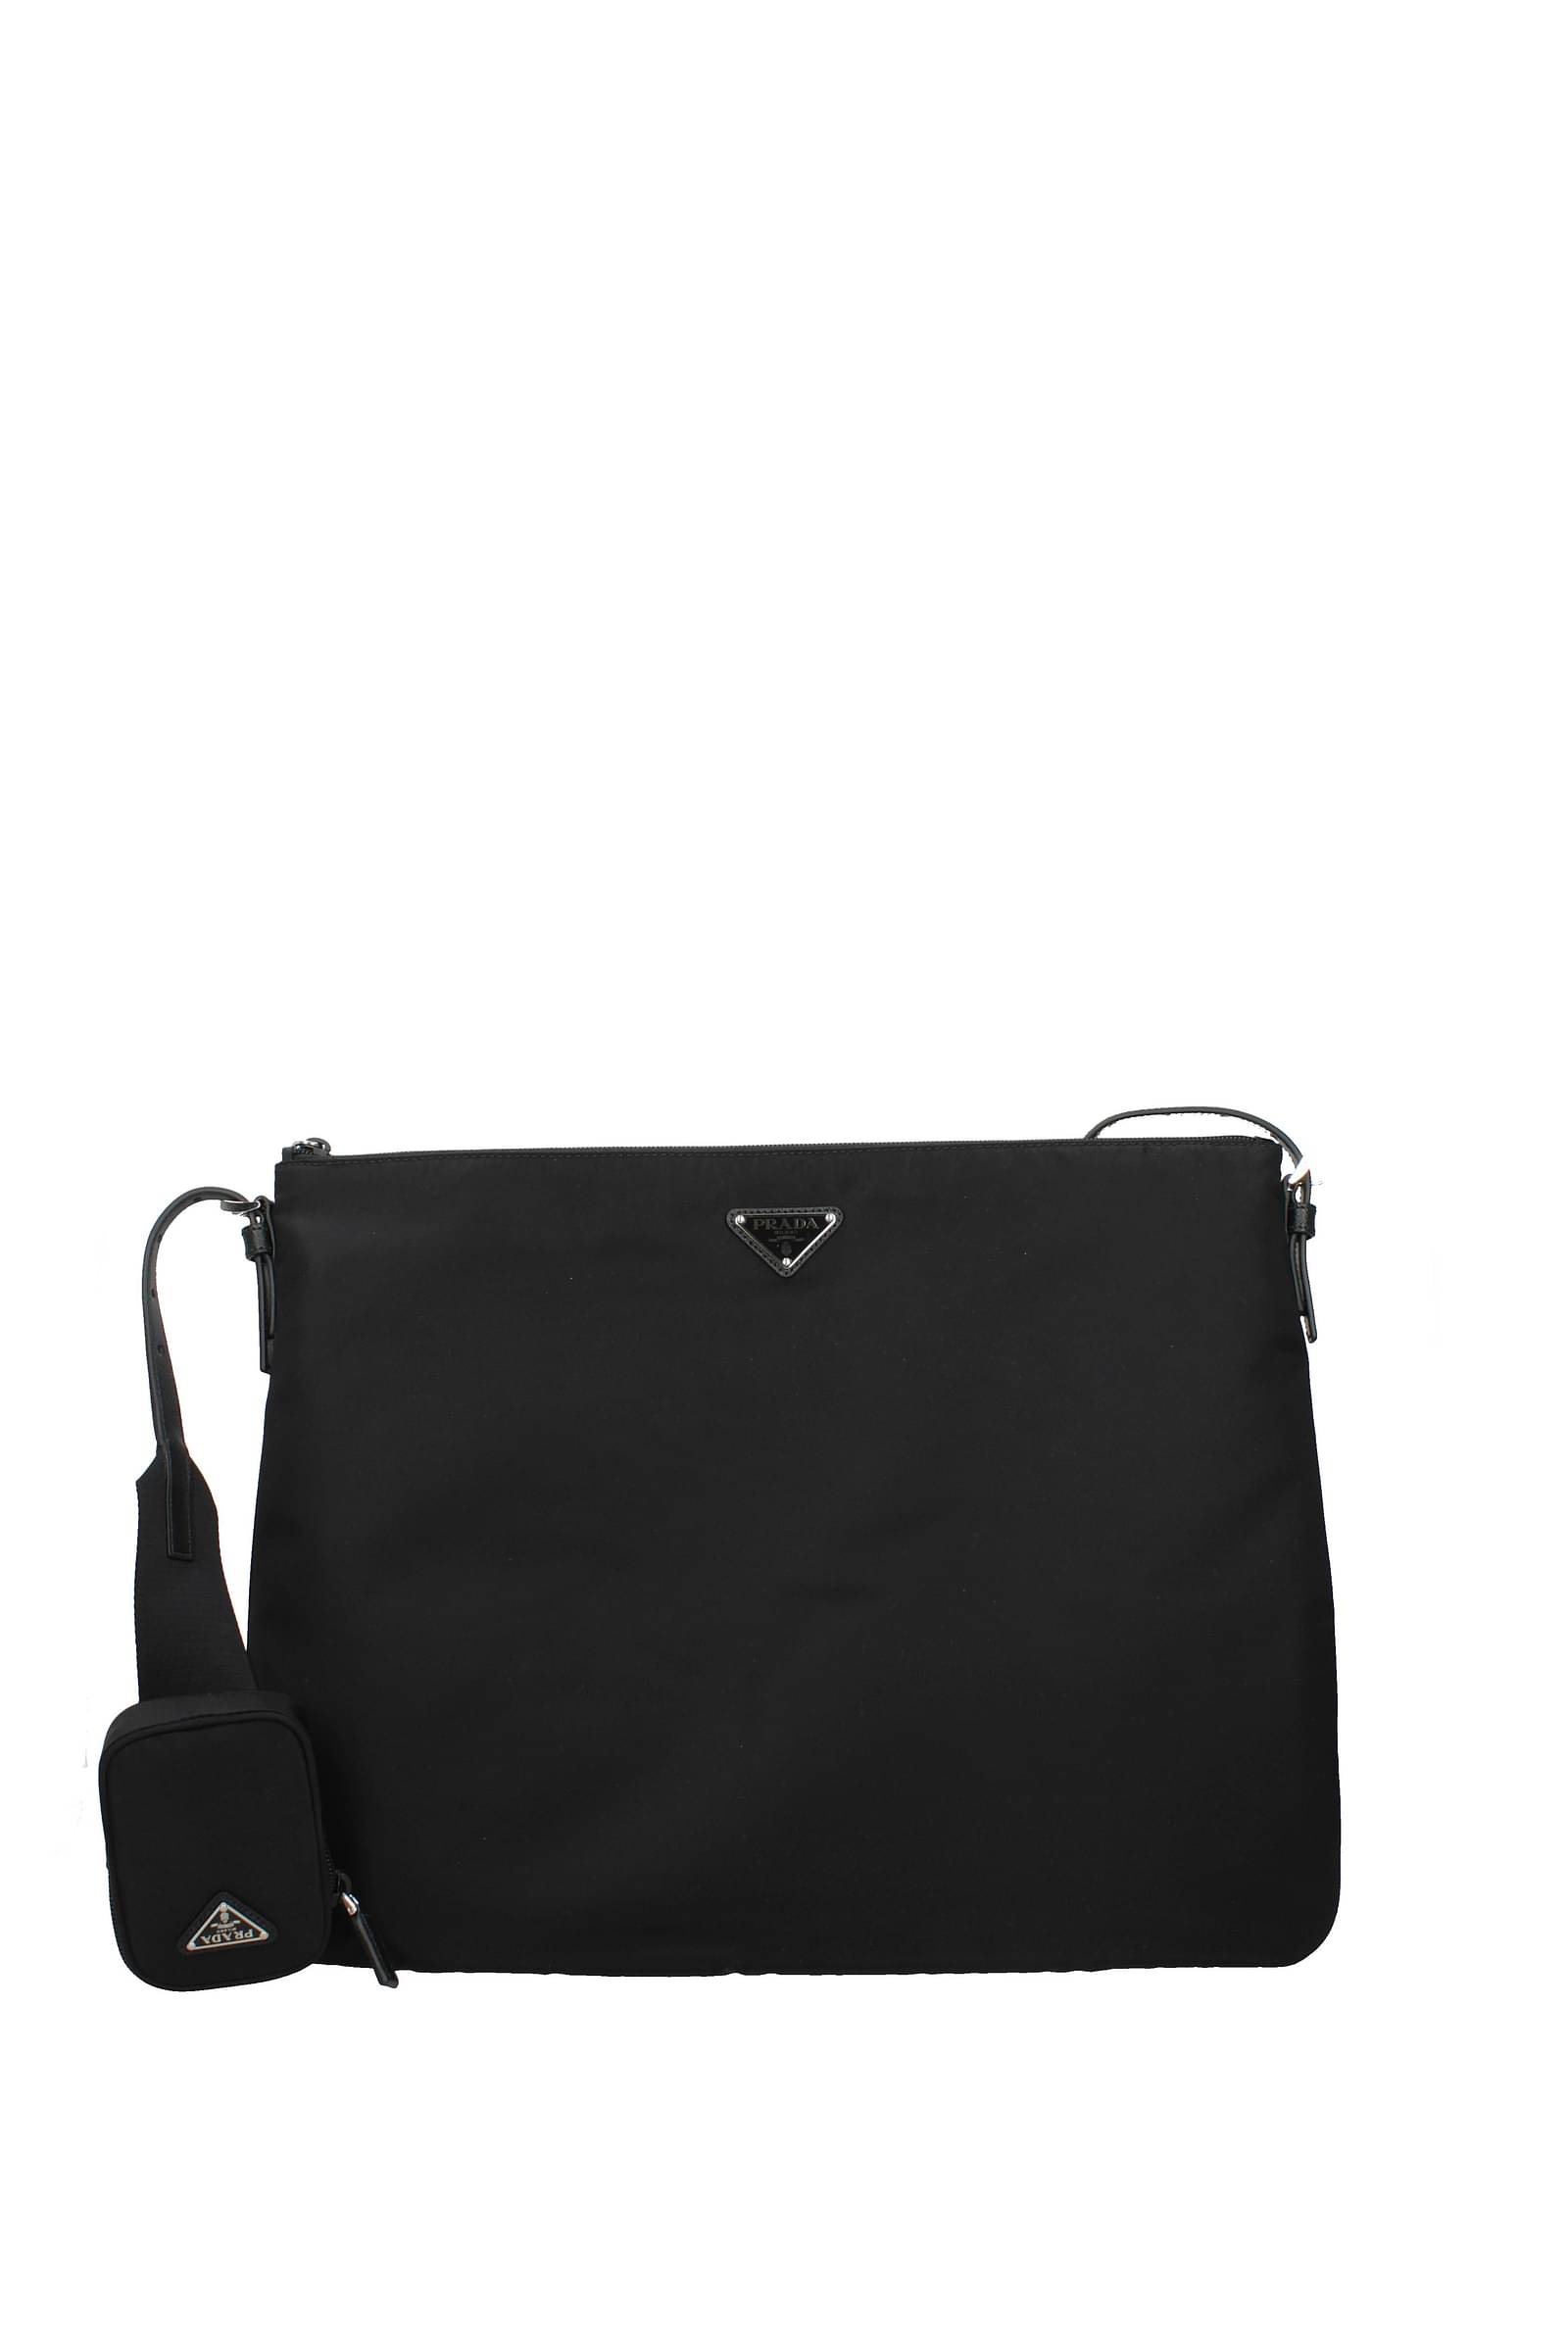 Red Leather Handbags Amazon Clearance - dukesindia.com 1694684262